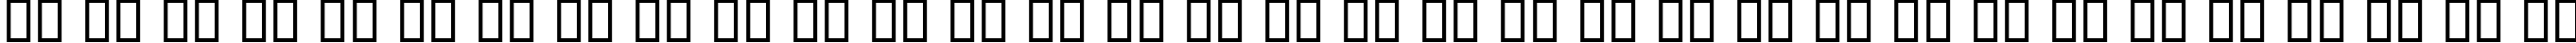 Пример написания русского алфавита шрифтом B Arabic Style